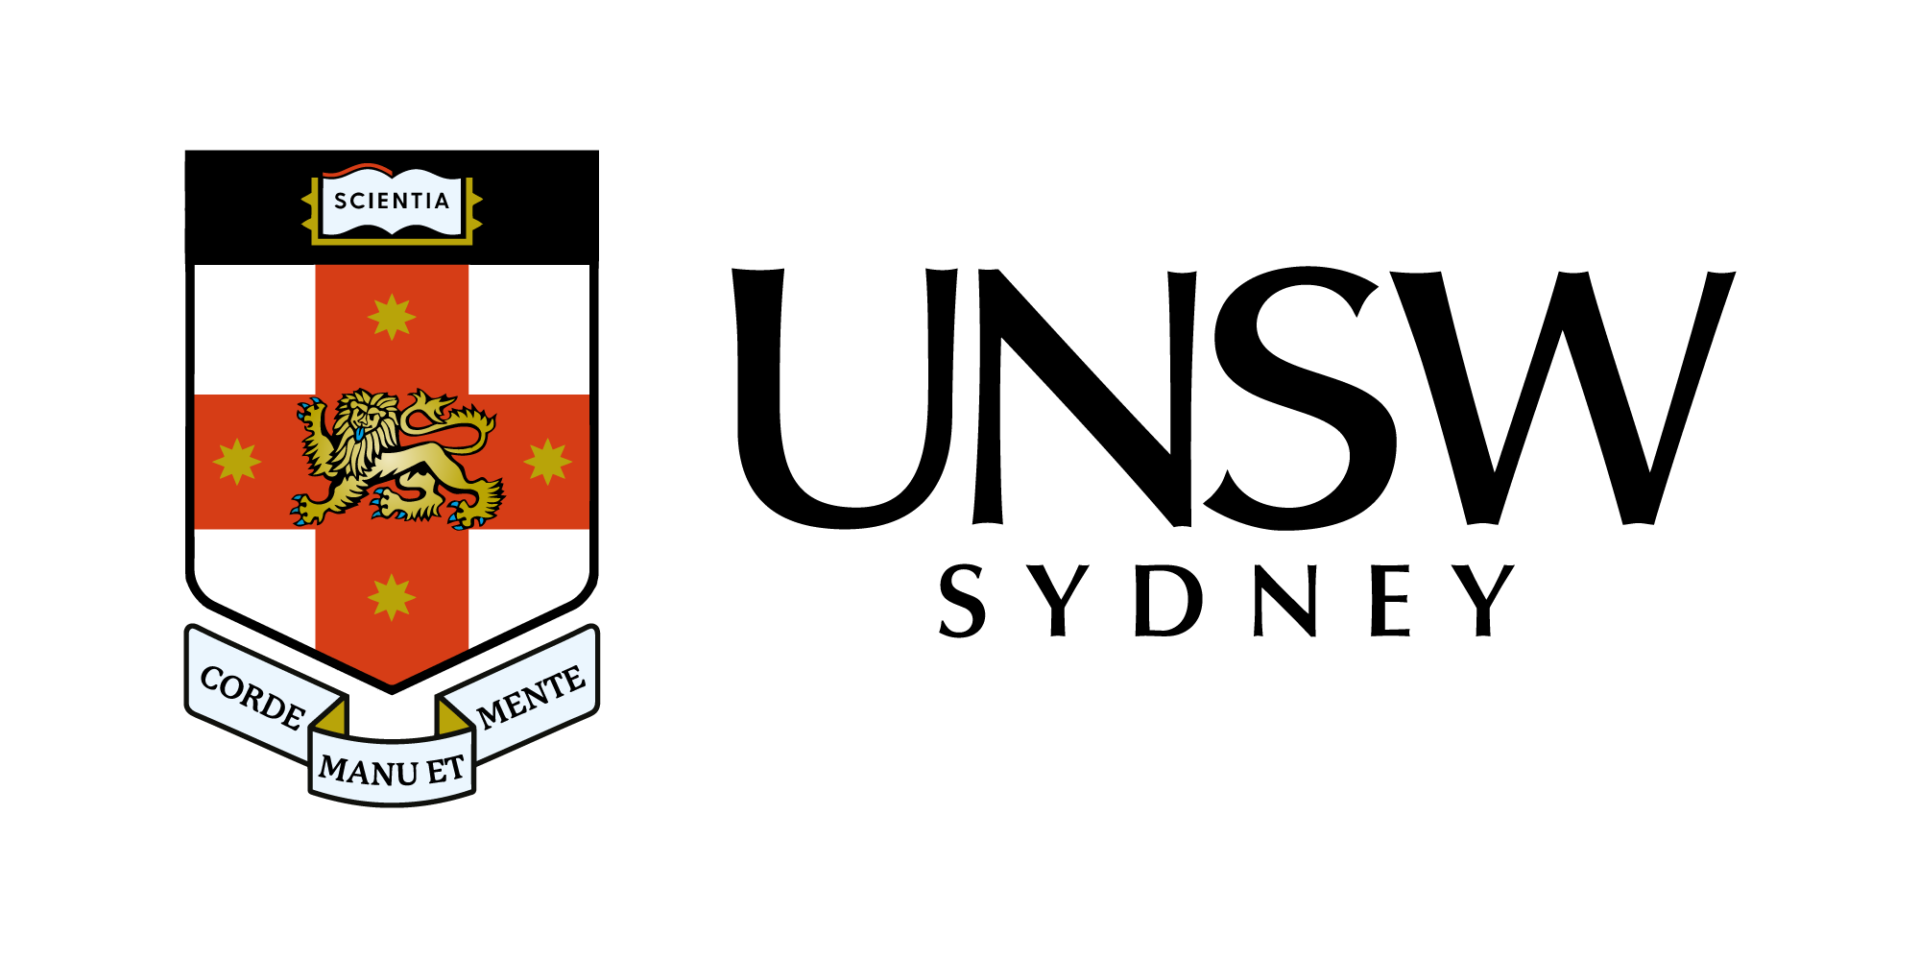 UNSW Sidney-logo Betekenis, PNG en Vector AI - Mrvian